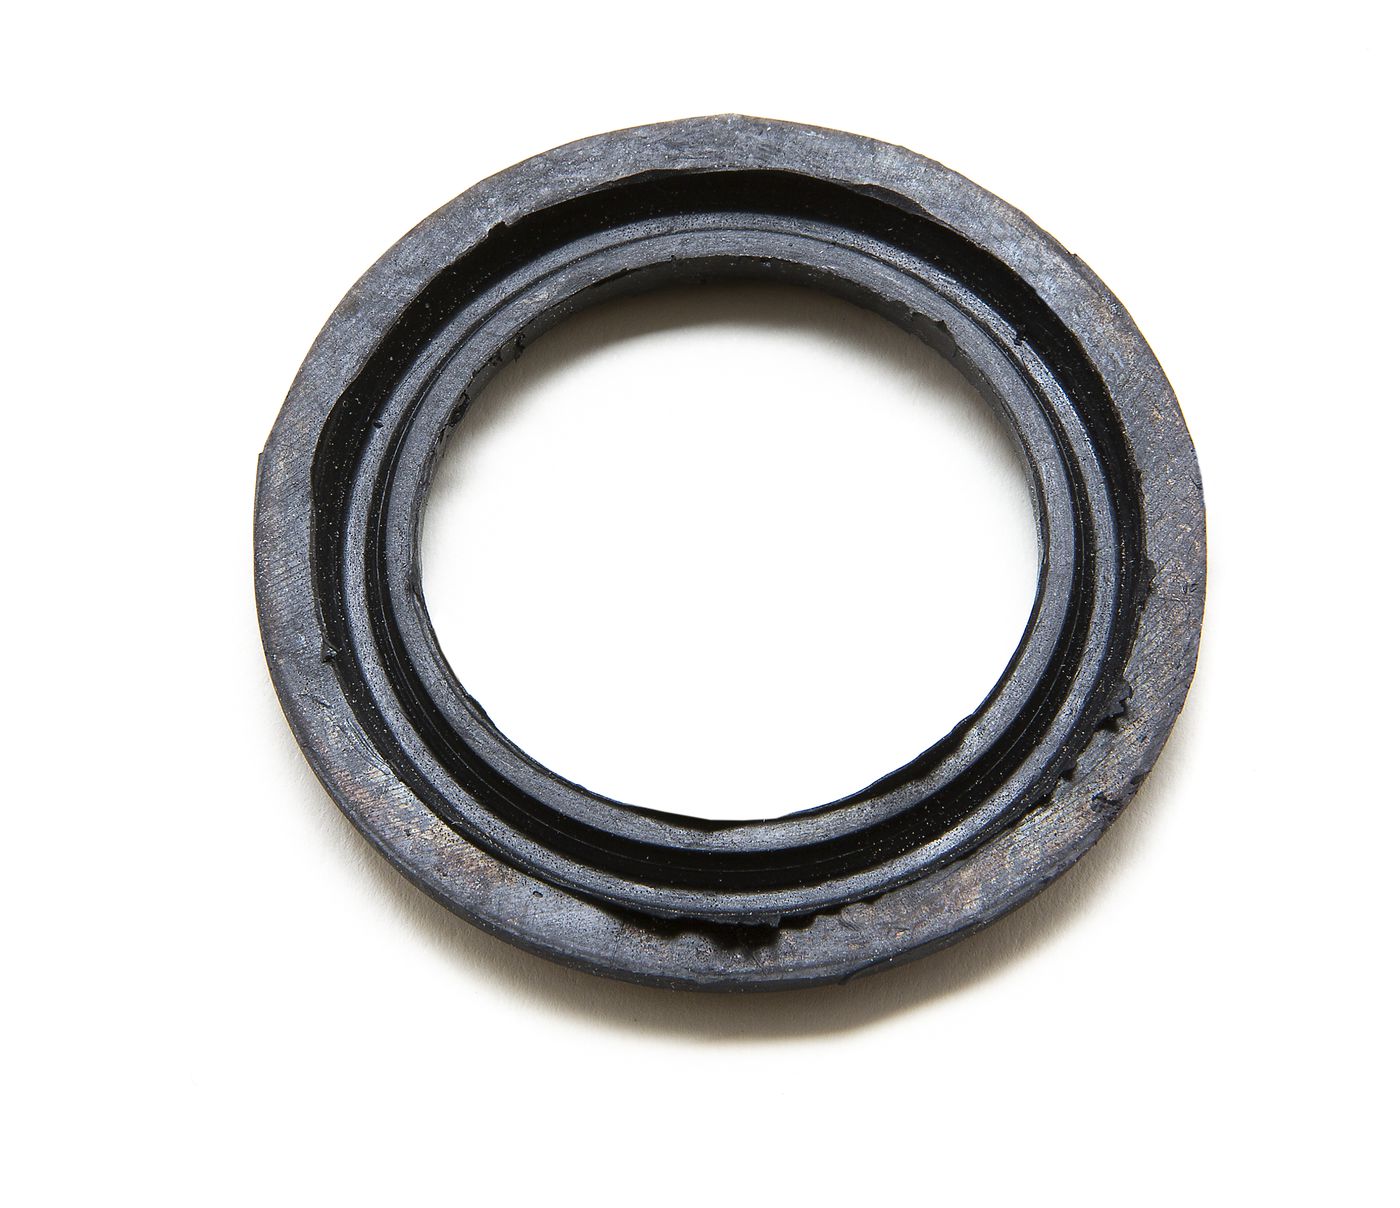 Gummidichtring
Rubber sealing ring
Joint en caoutchouc
Junta de 